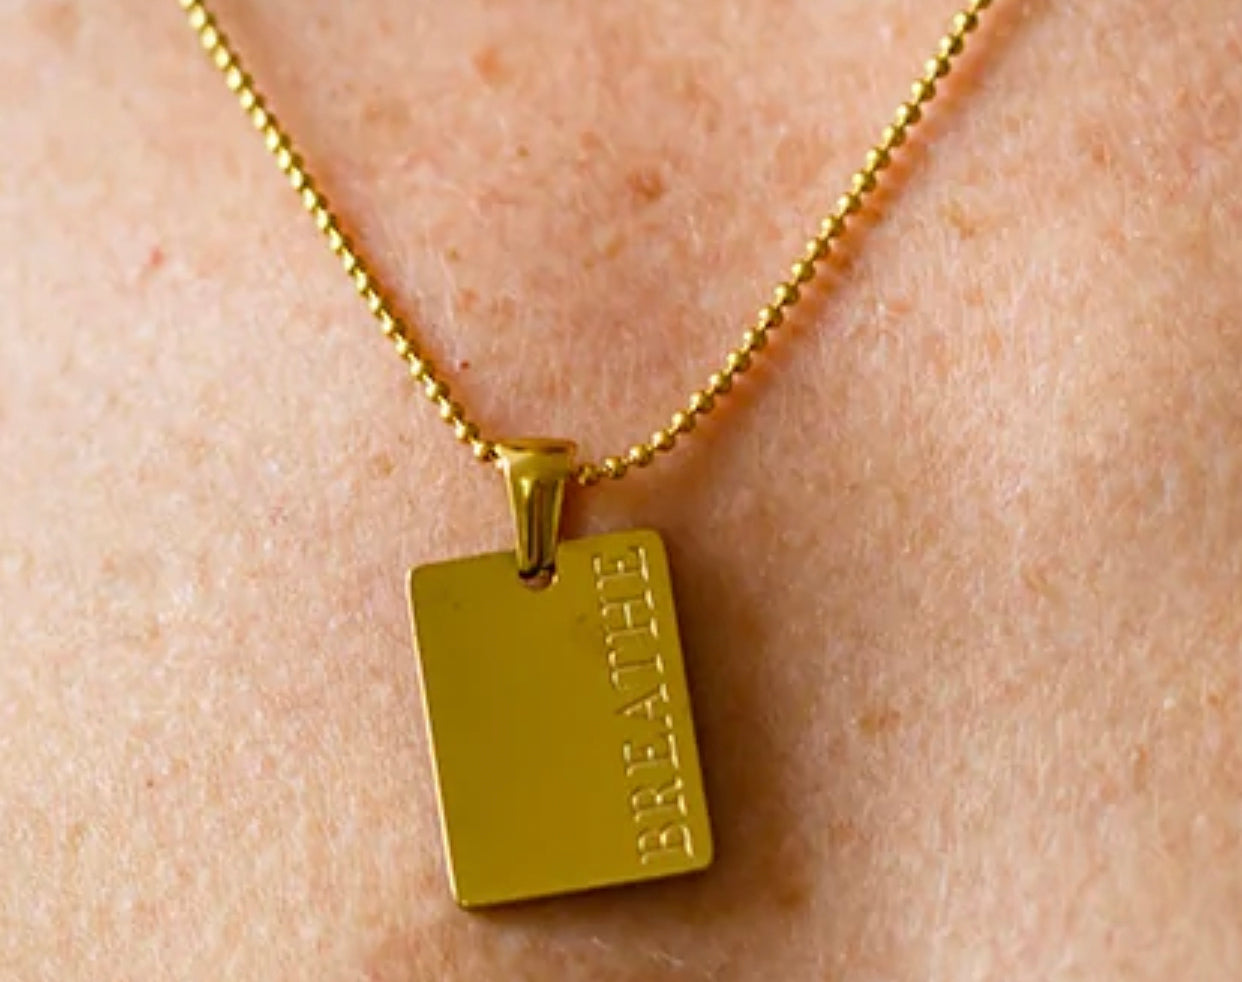 Waterproof Jewelry: Breathe Pendent Necklace